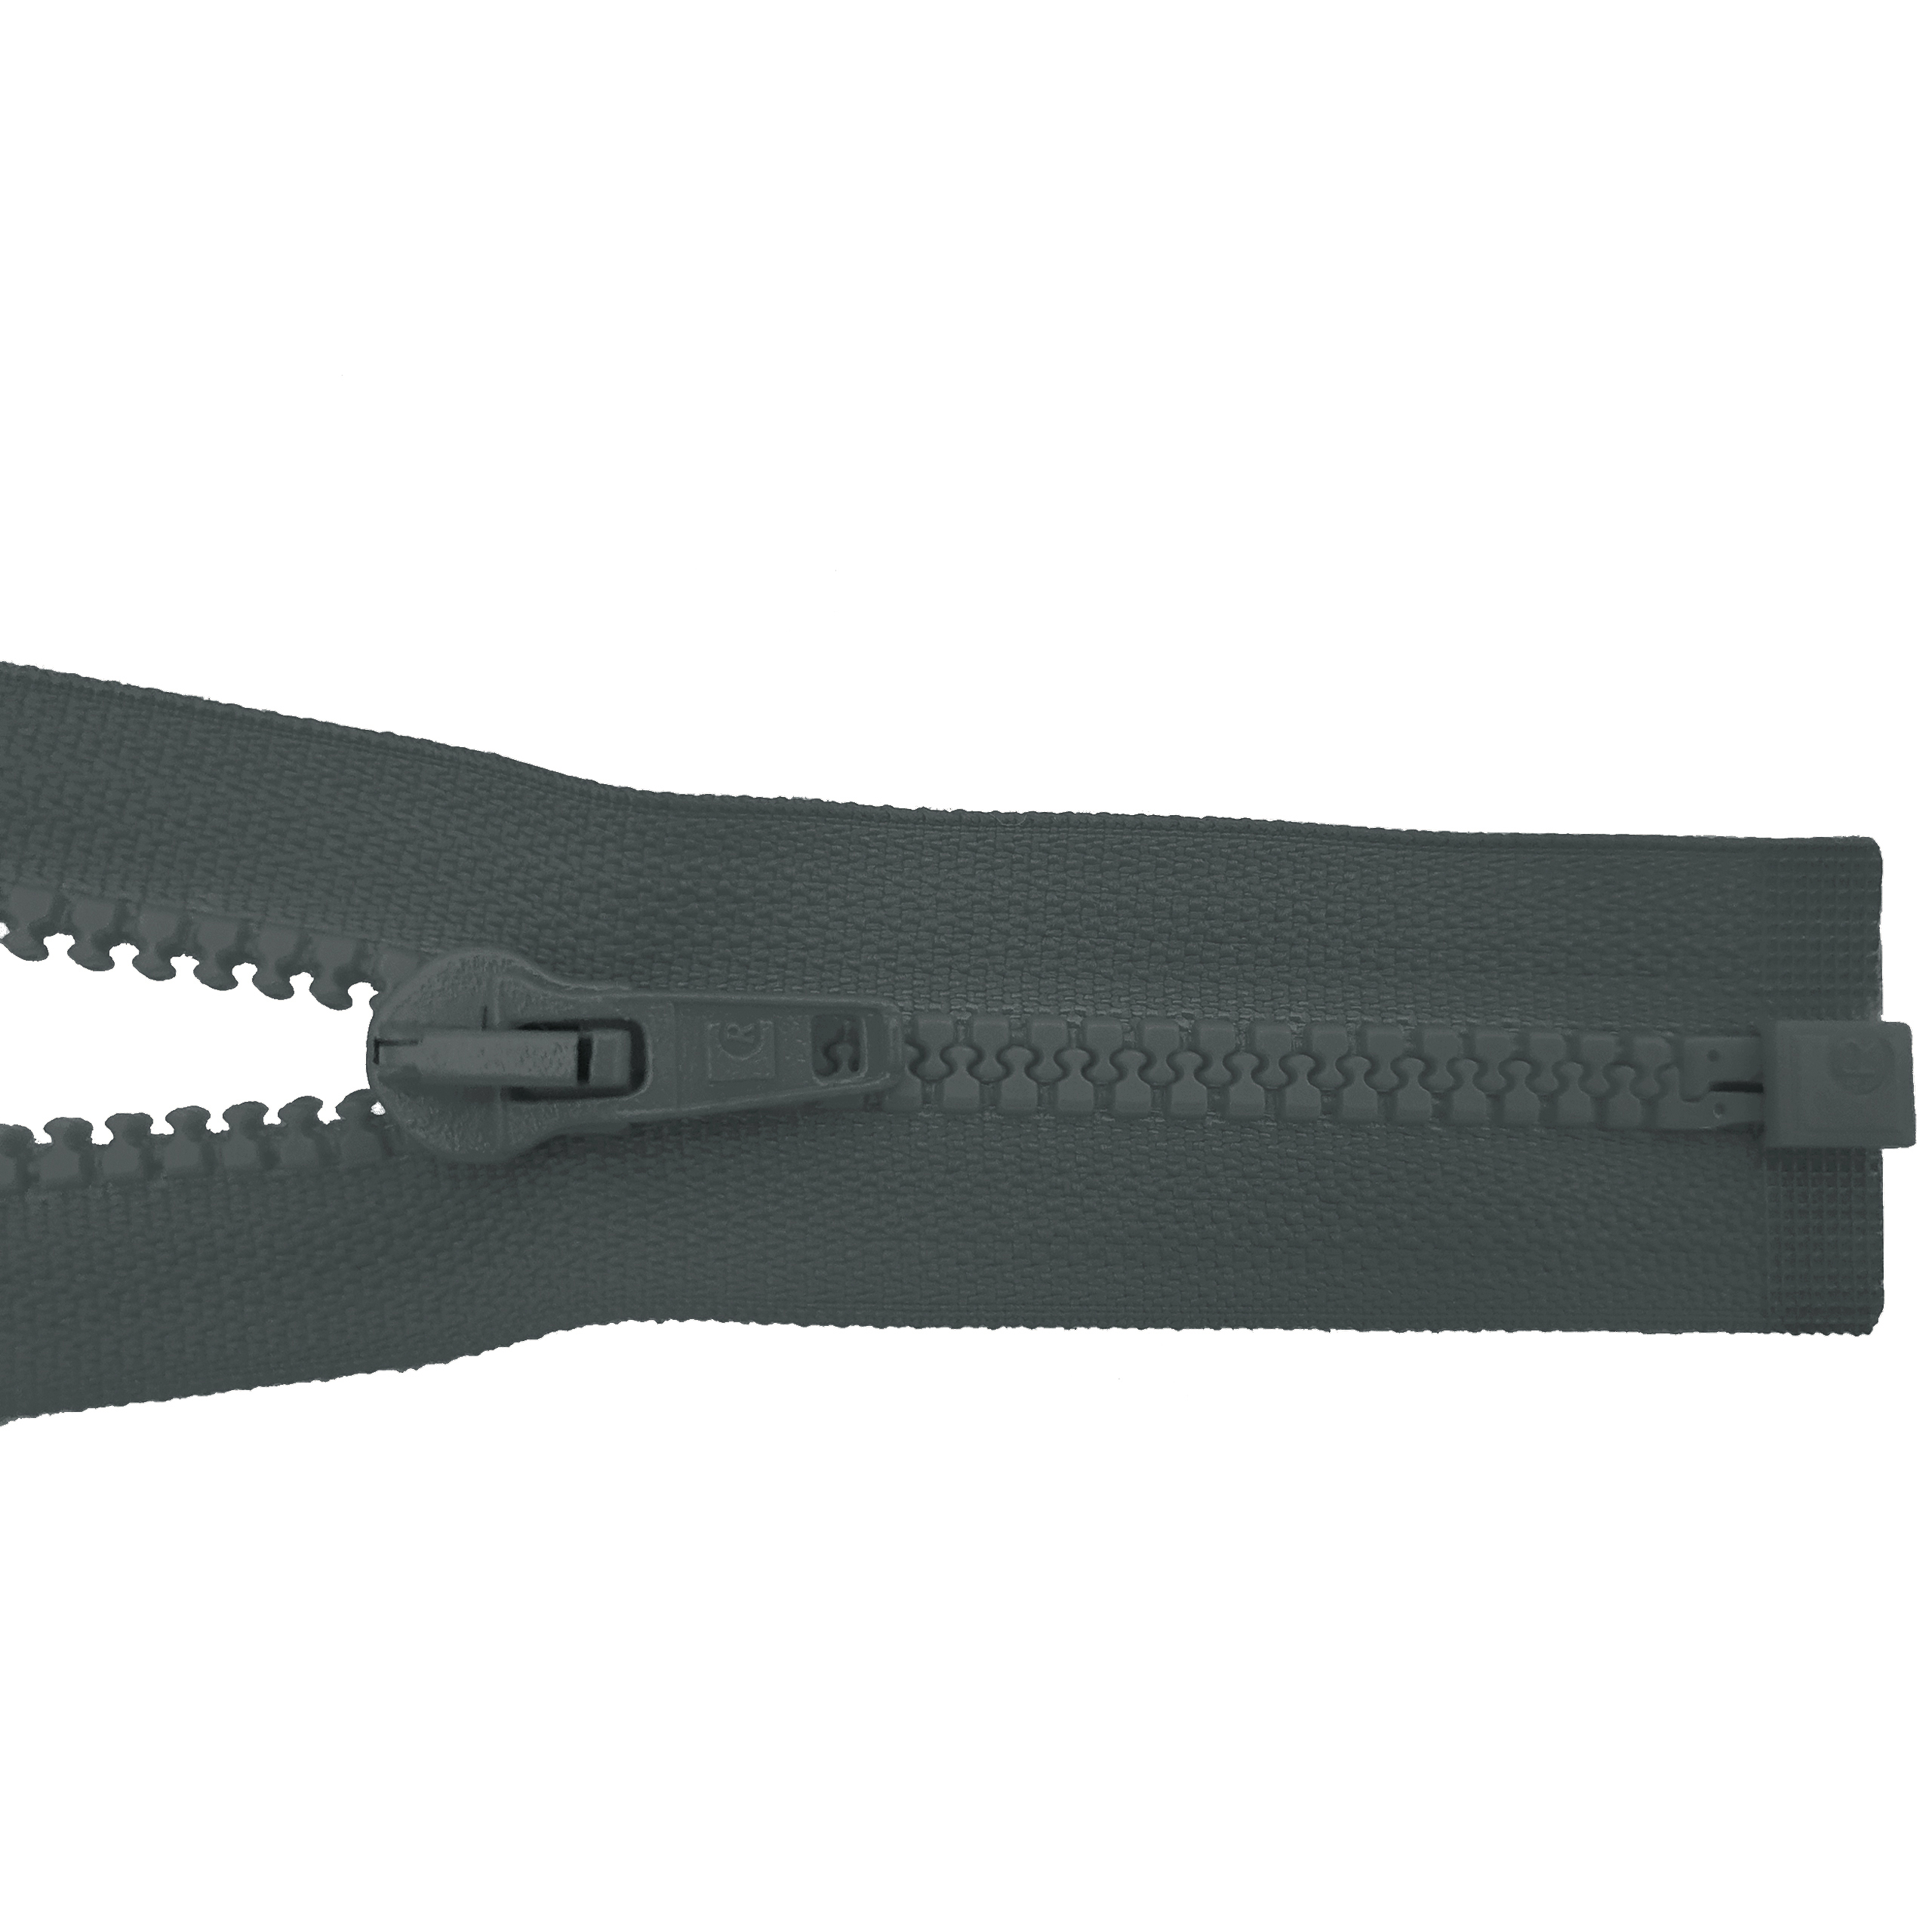 zipper 80cm,divisible, molded plastic, wide, graphite grey